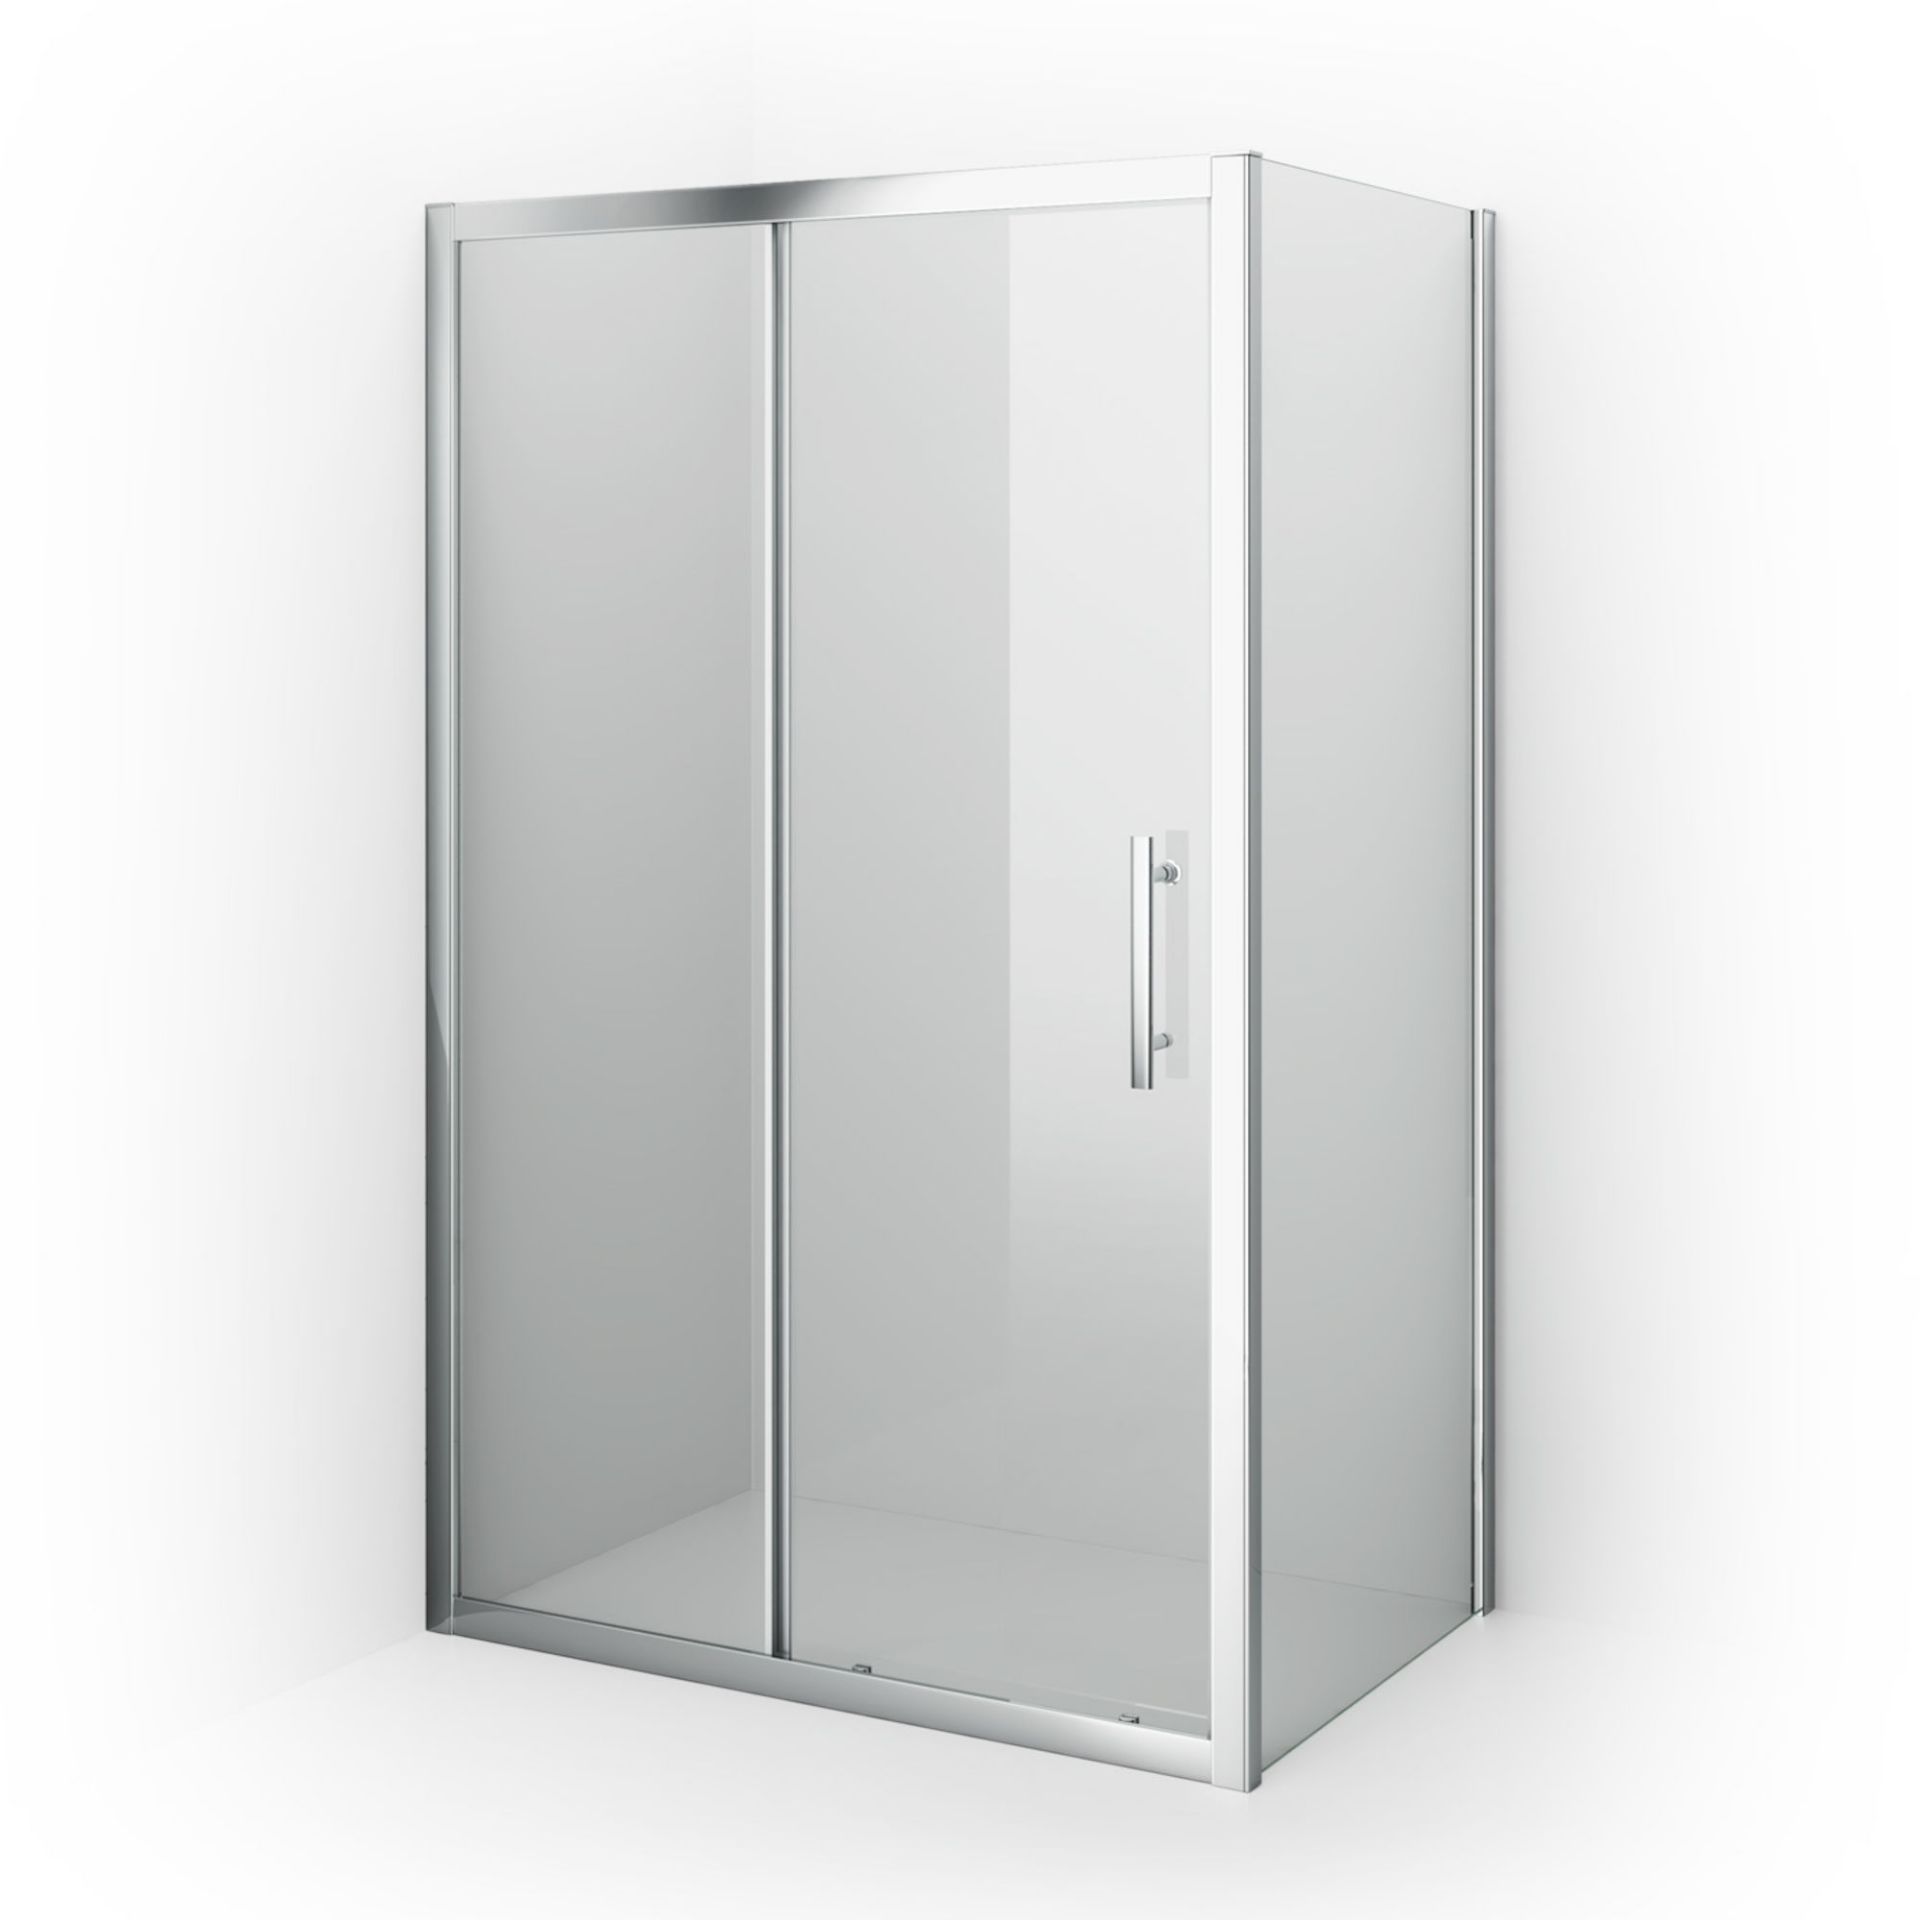 (TP171) 1100x900mm - 8mm - Premium EasyClean Sliding Door Shower Enclosure. RRP £409.99. 8mm - Image 5 of 6